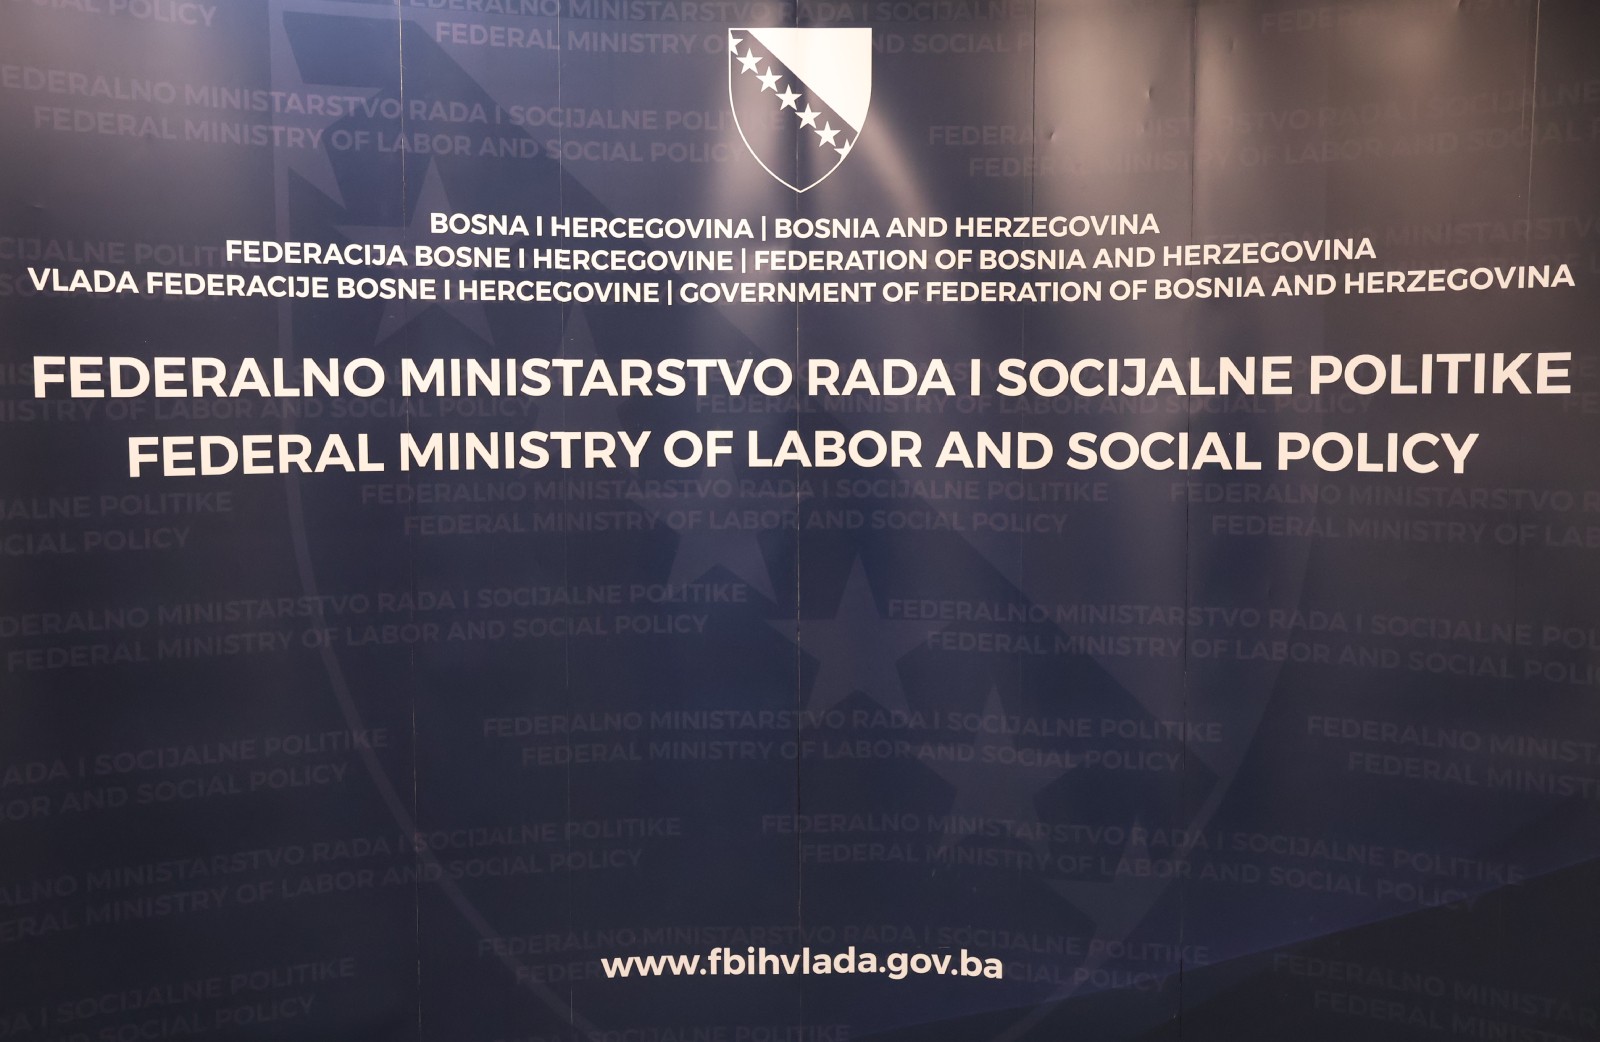 Федерално министарство рада и социјалне политике добило позитиван ревизорски извјештај